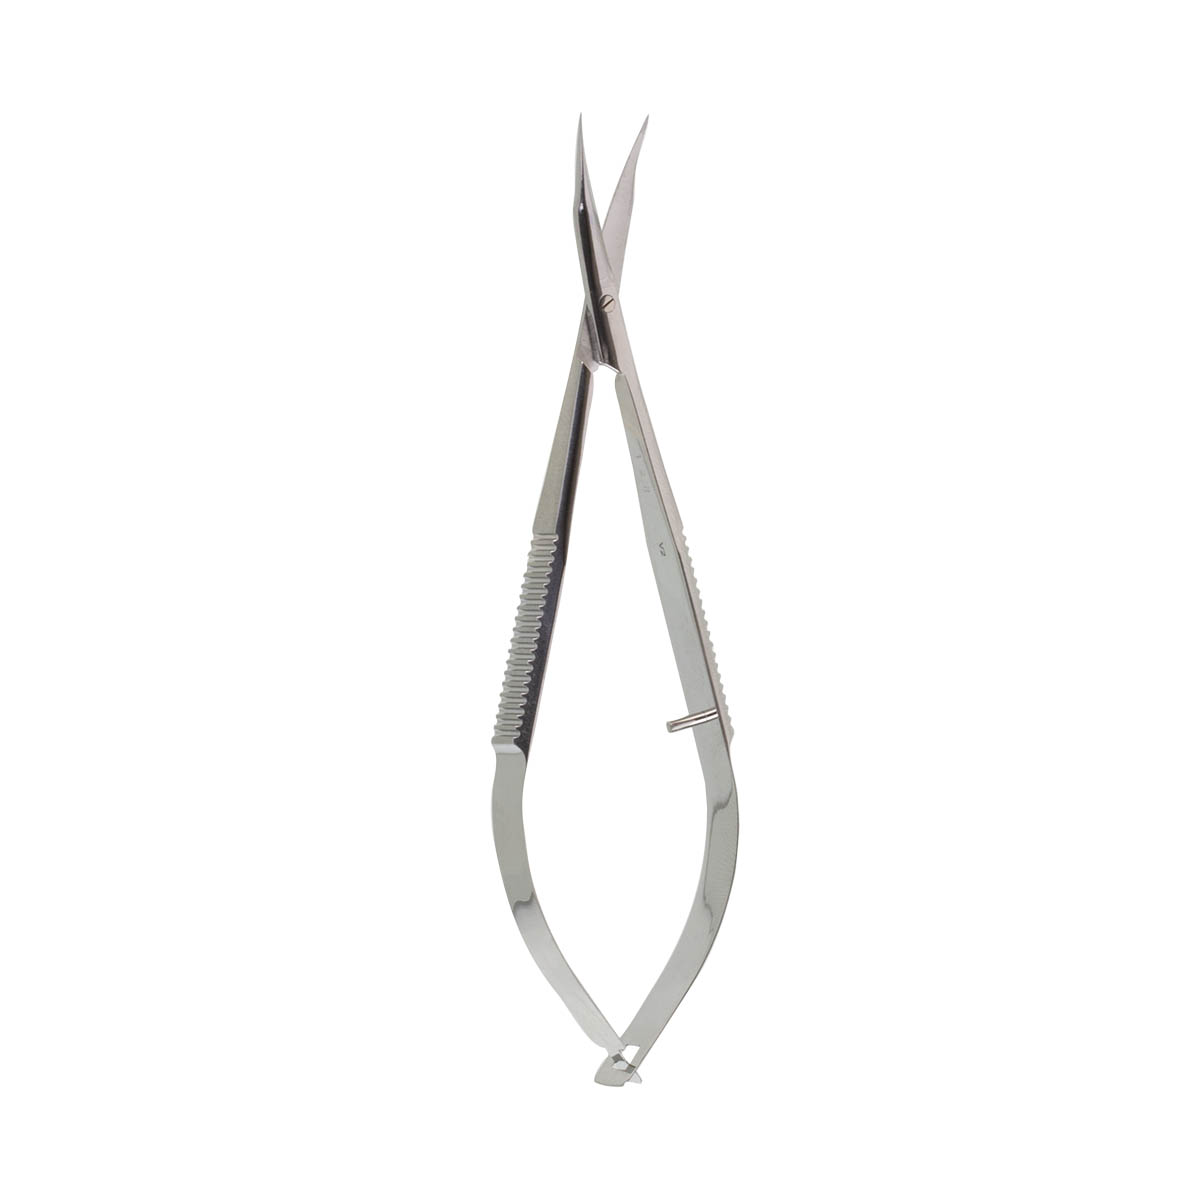 Westcott Stitch Scissors - Curved Sharp Tips